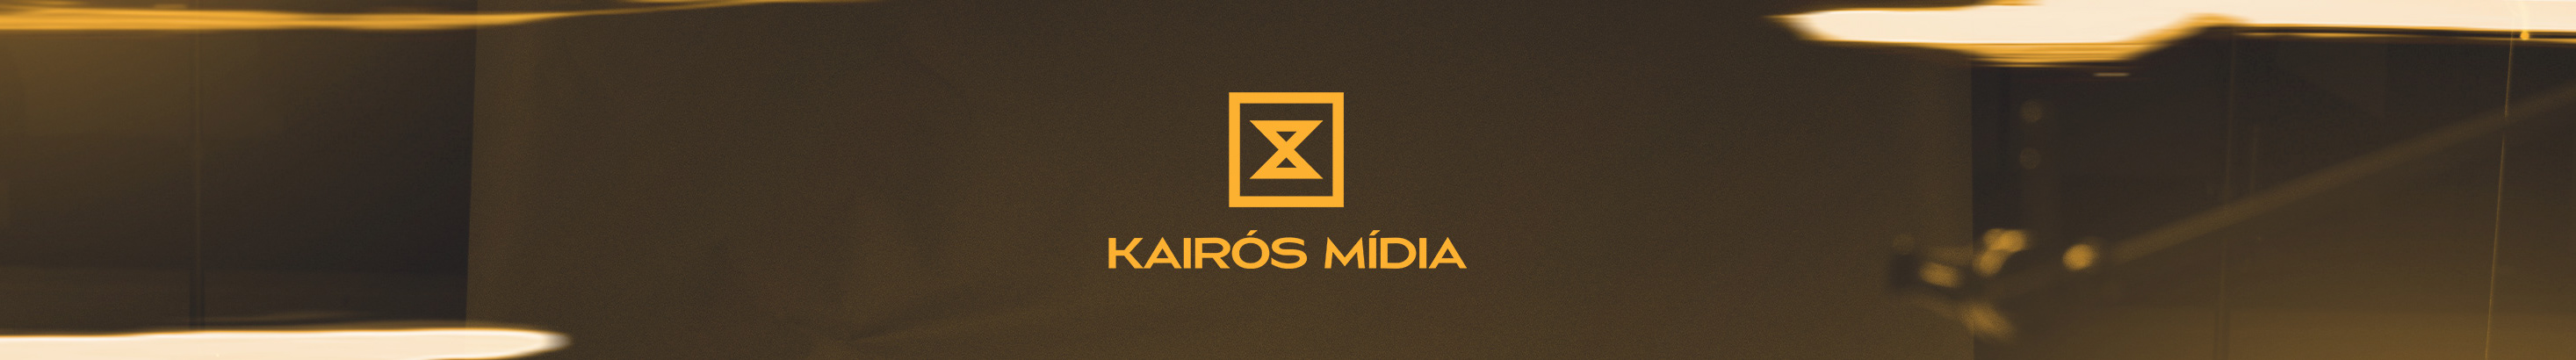 KAIRÓS MÍDIA profil başlığı